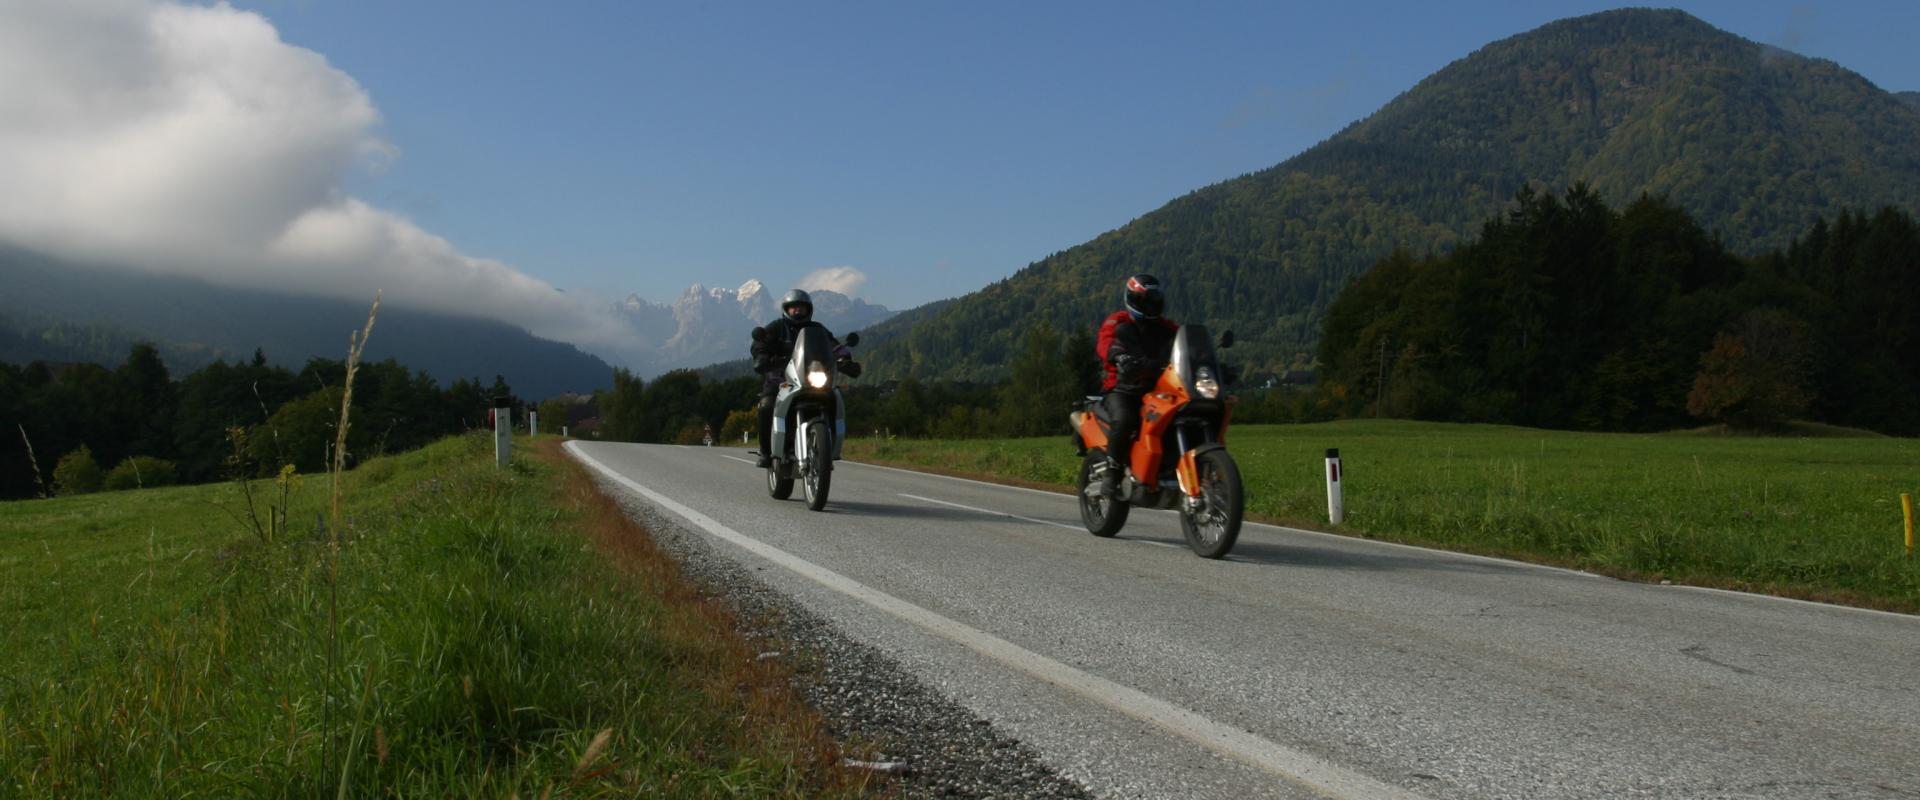 Motorradtour Kärnten Gailtal_0015.jpg